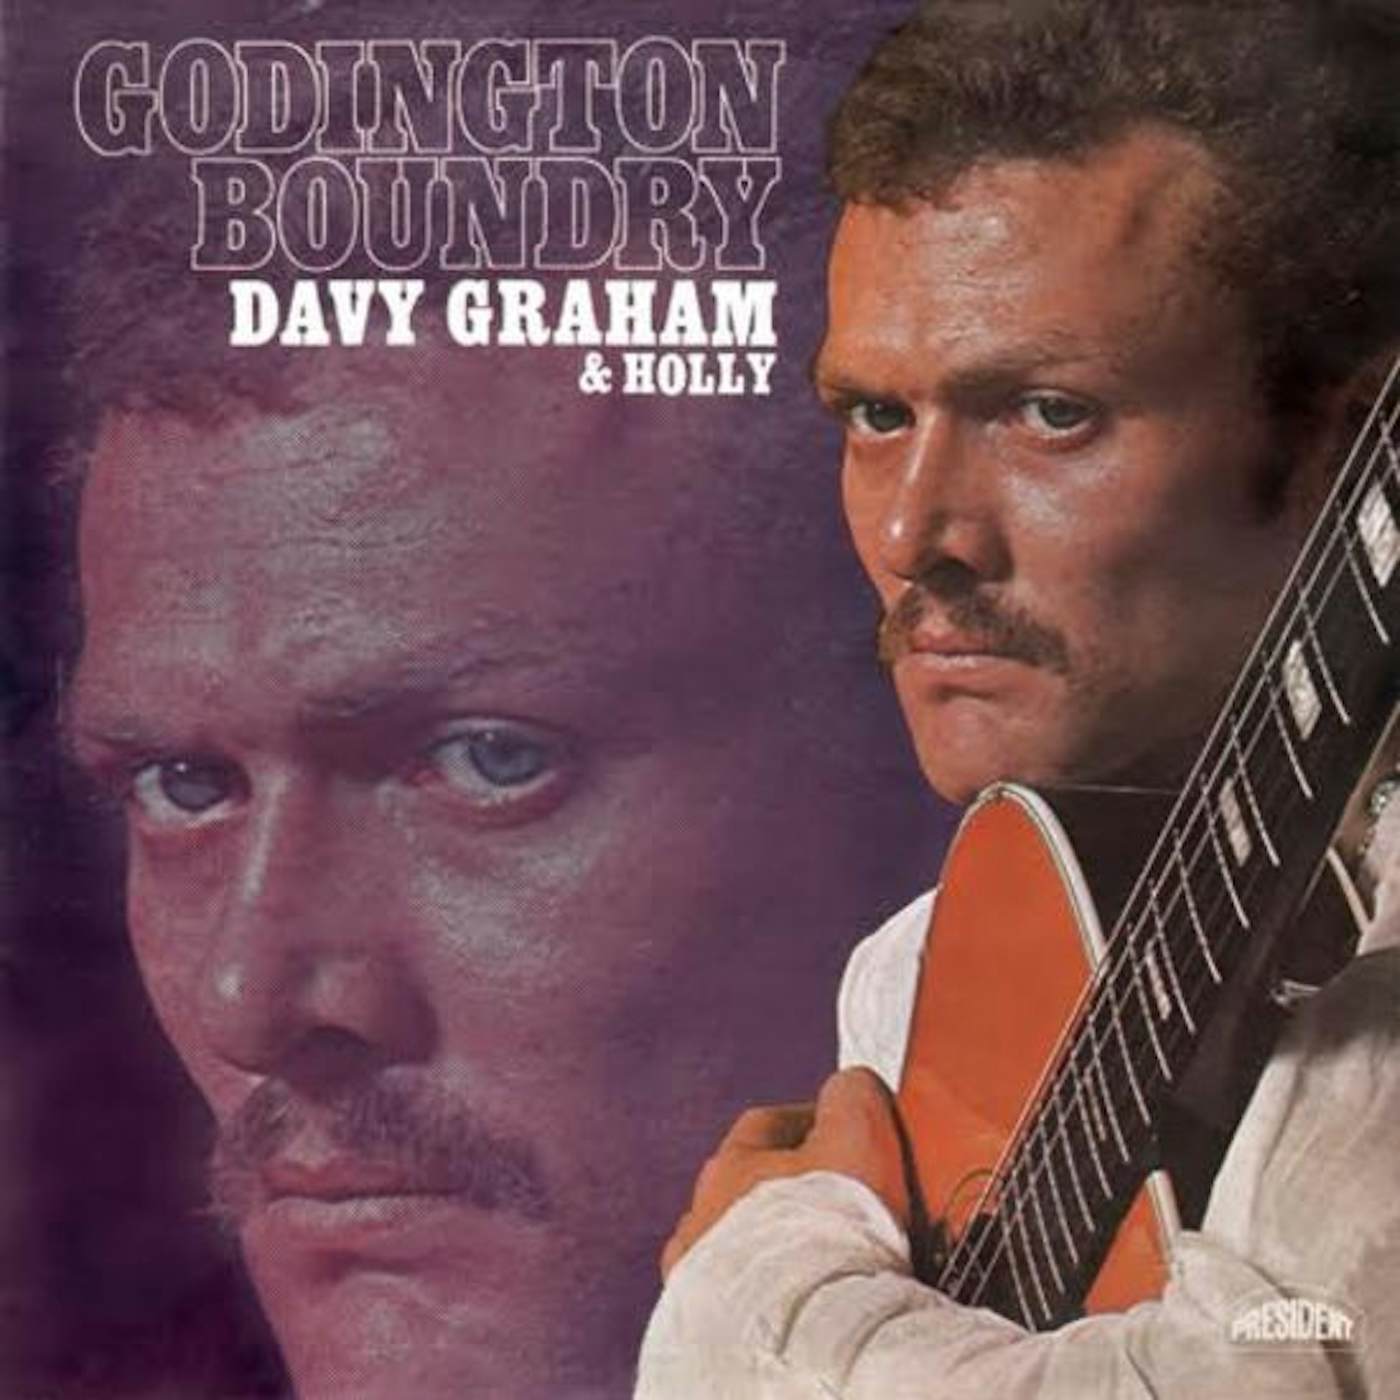 Davy Graham & Holly GODINGTON BOUNDRY Vinyl Record - UK Release